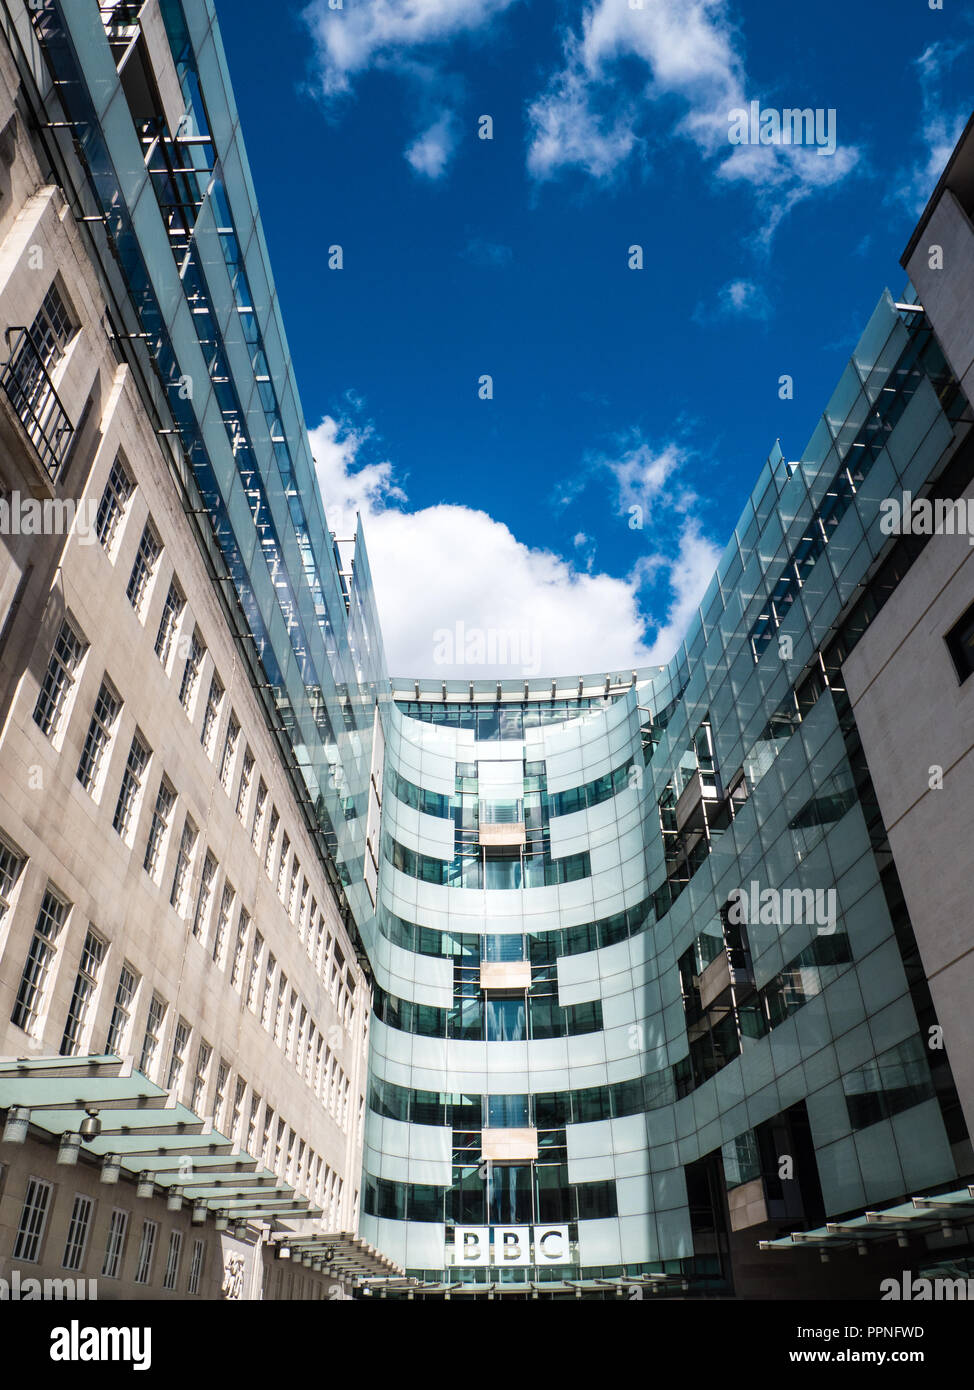 New Building, Broadcasting House, BBC Television Centre, Portland Place, Marylebone, London, England, UK, GB. Stock Photo